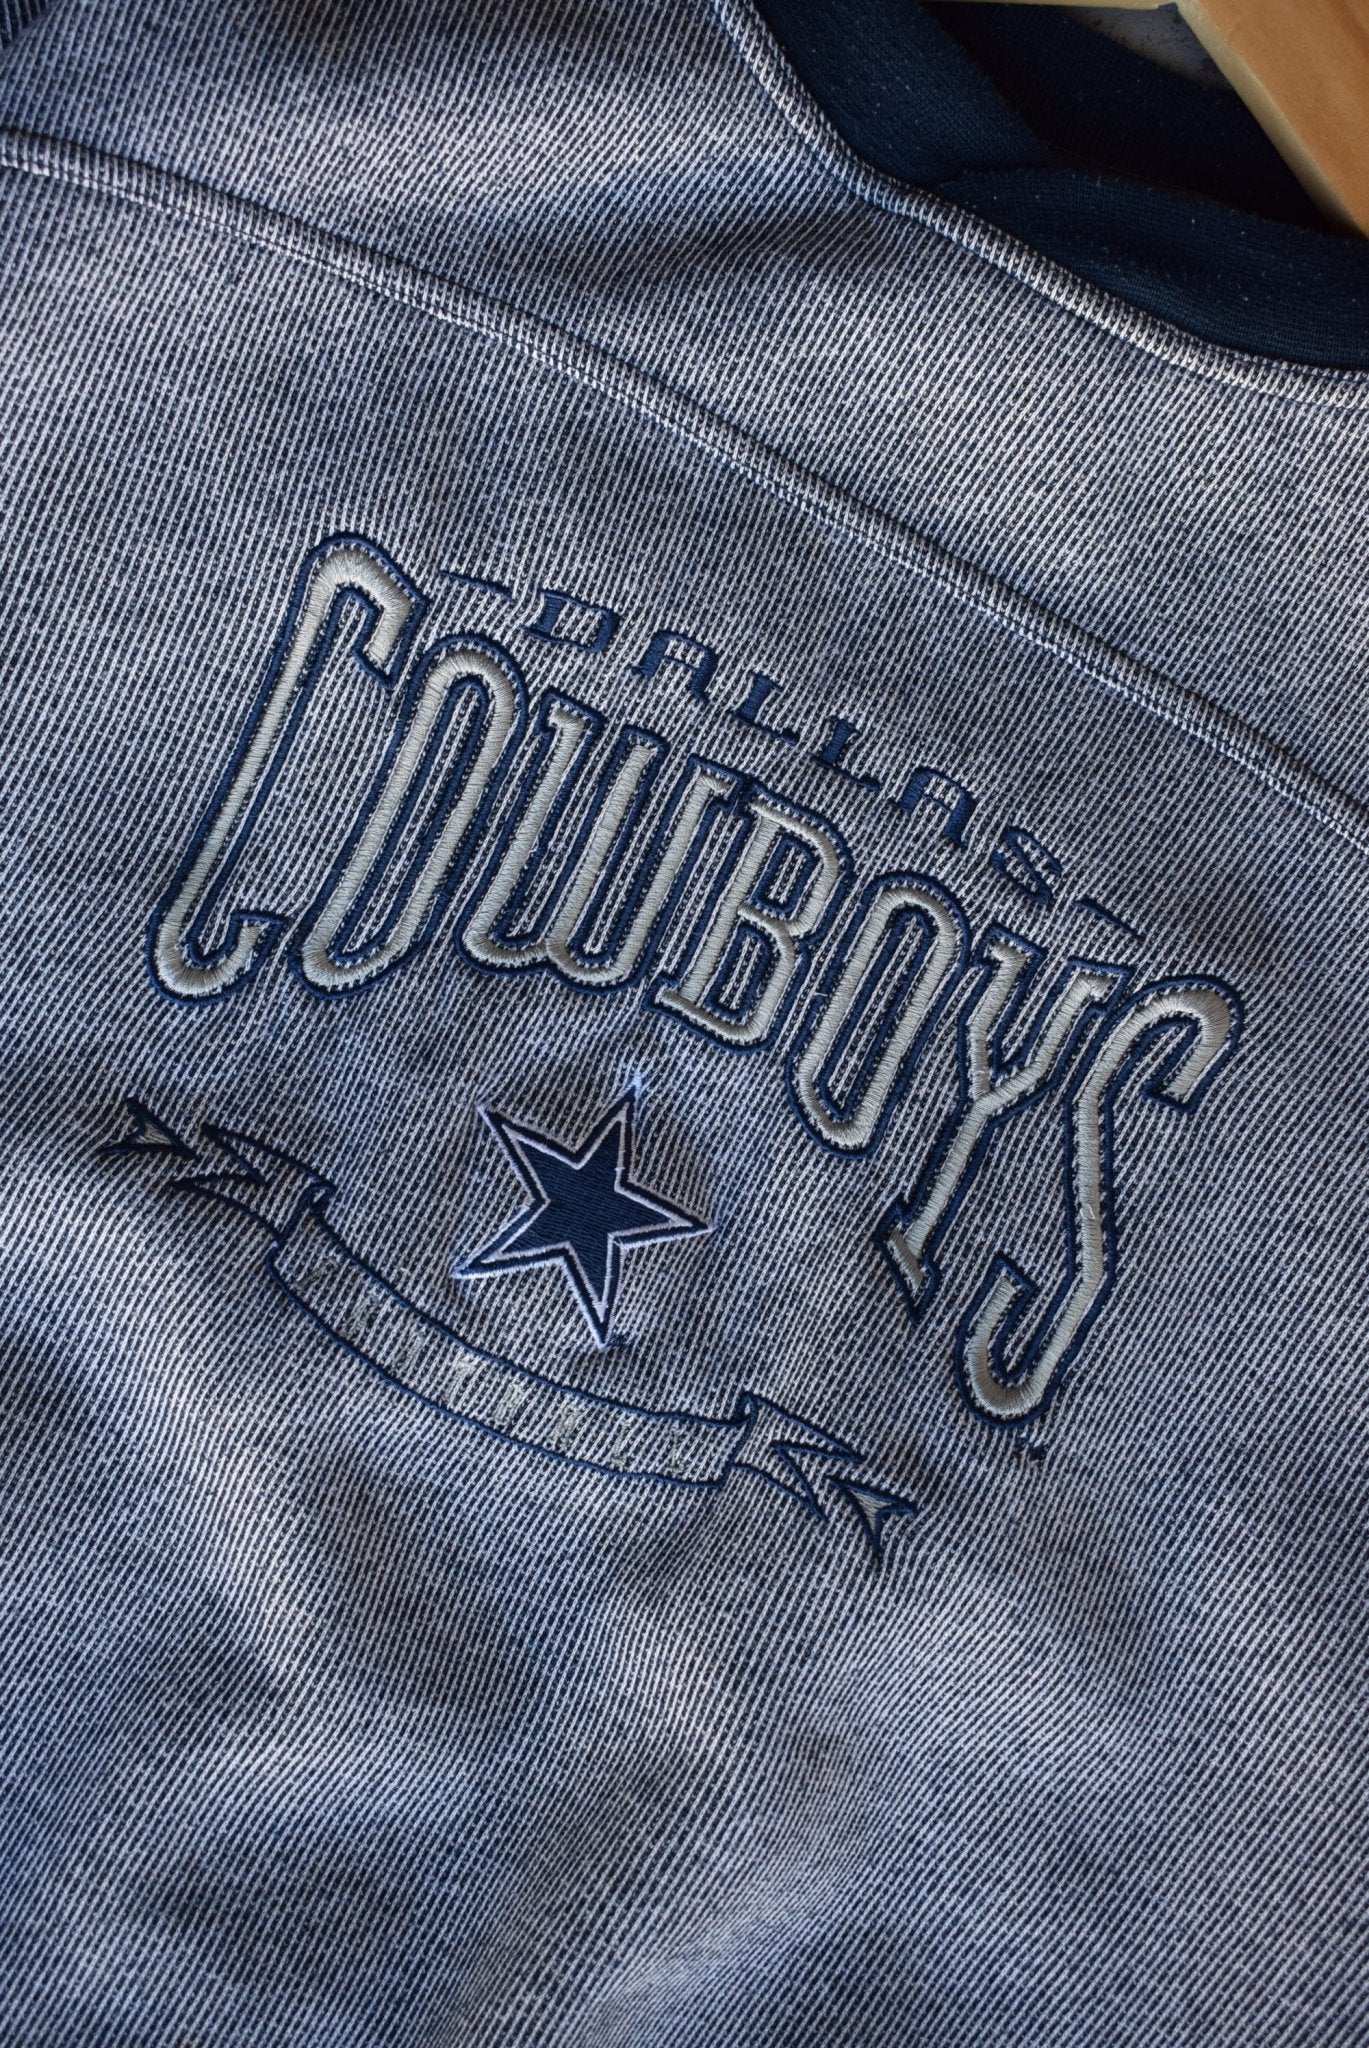 Vintage NFL Dallas Cowboys Embroidered Crewneck (XL) - Retrospective Store